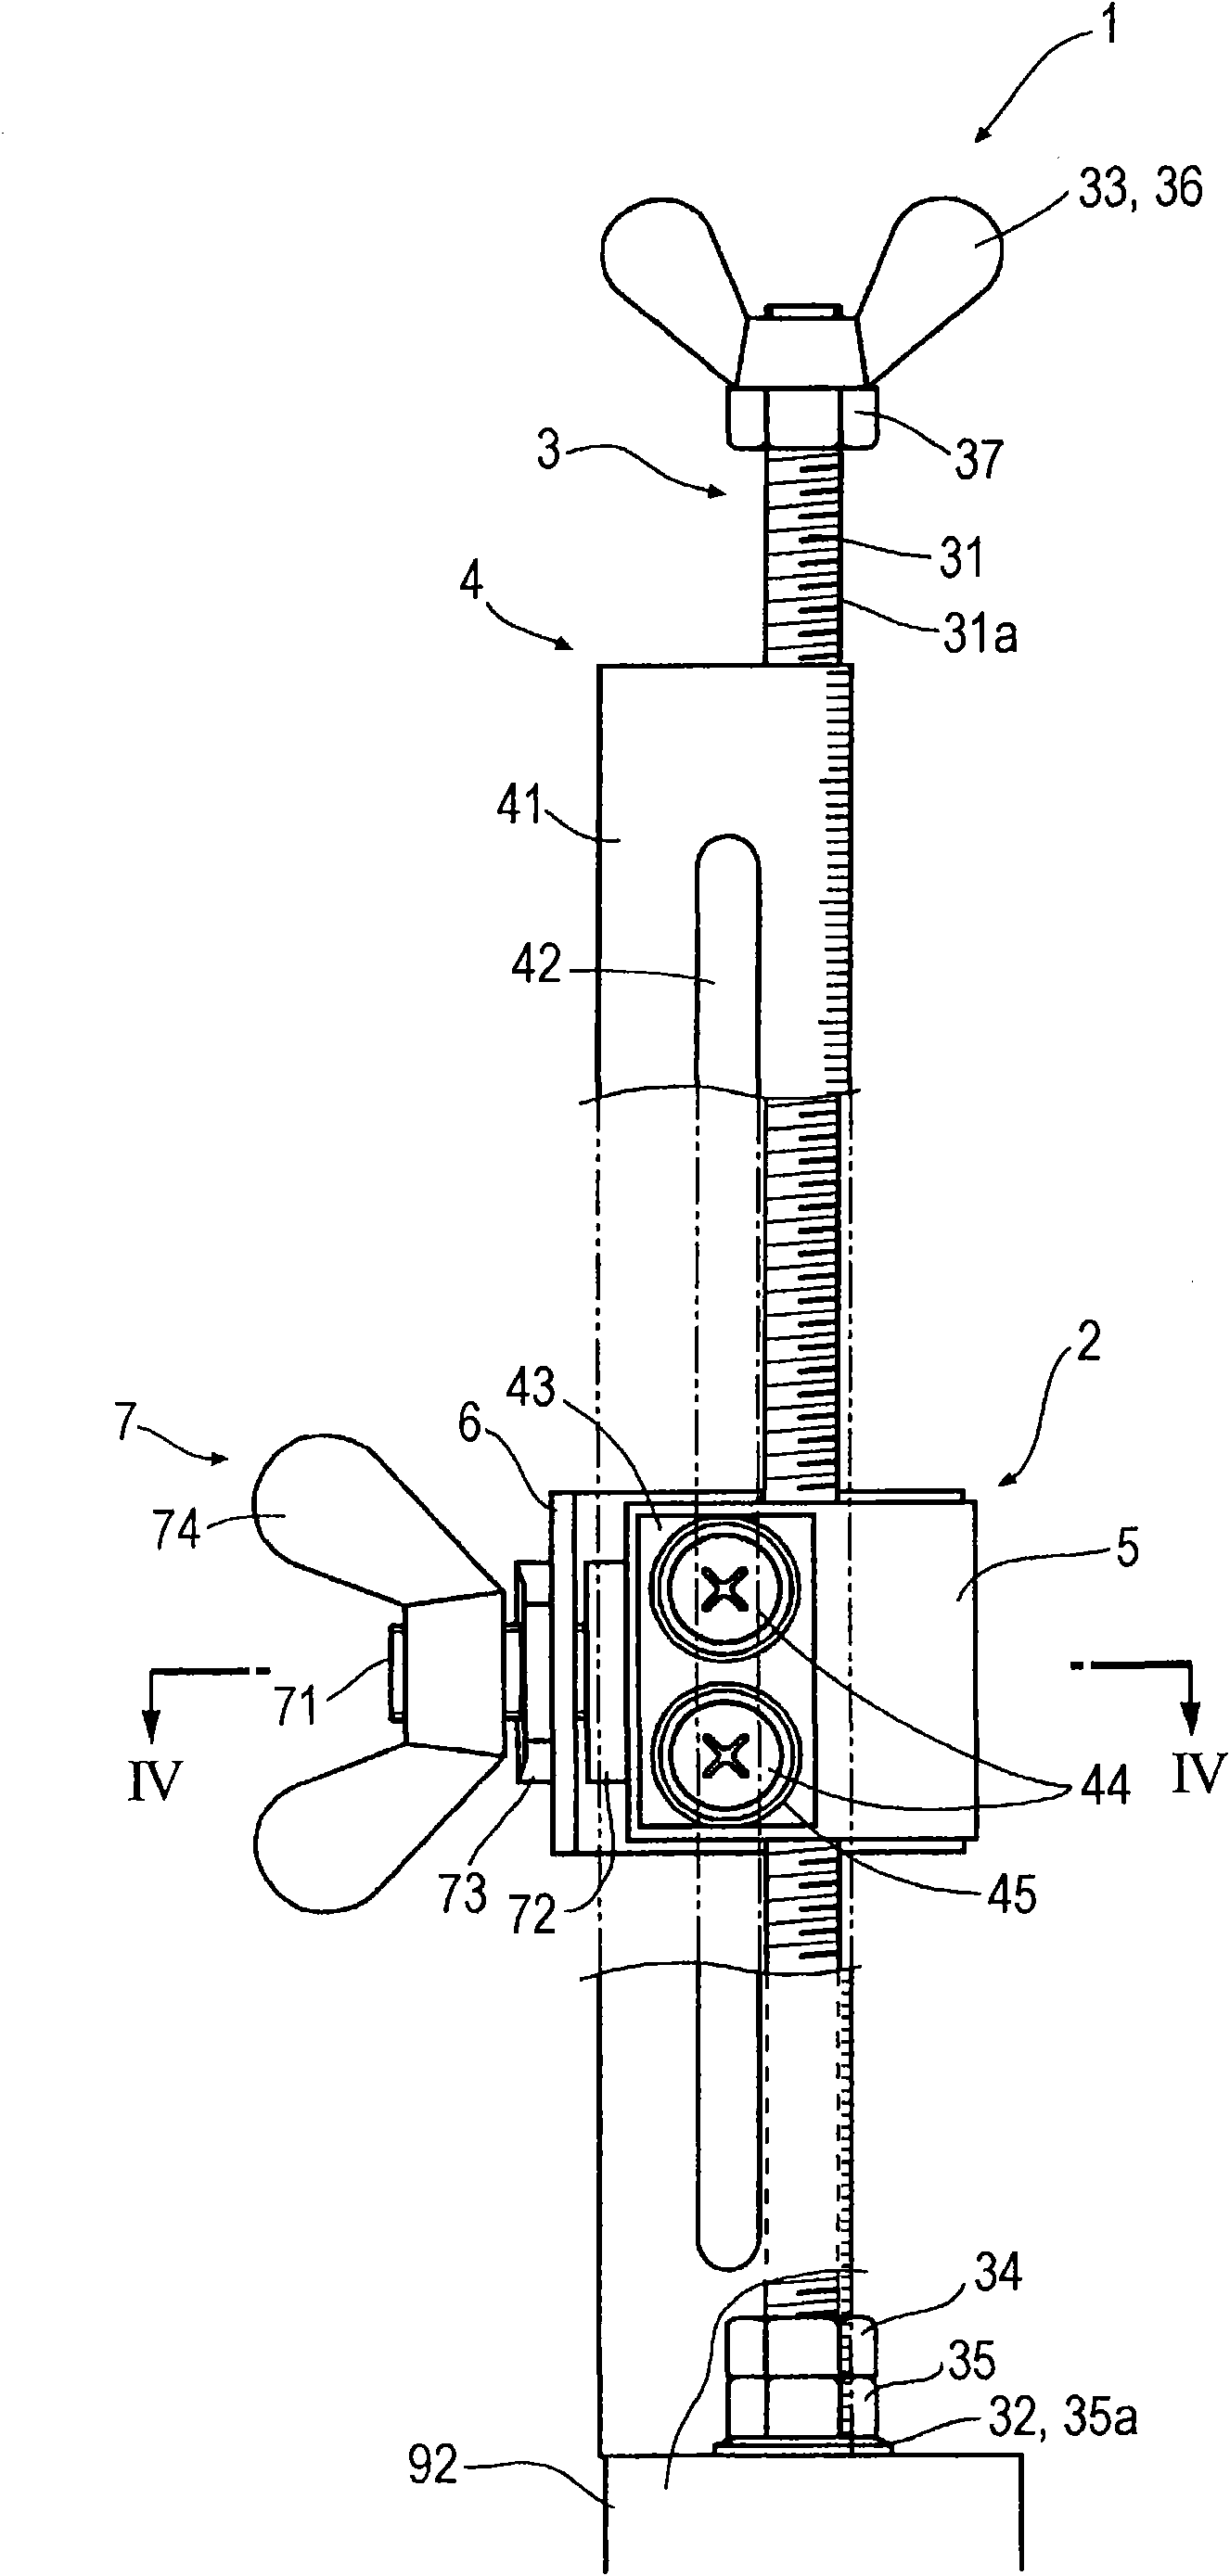 Heald-frame height adjusting apparatus